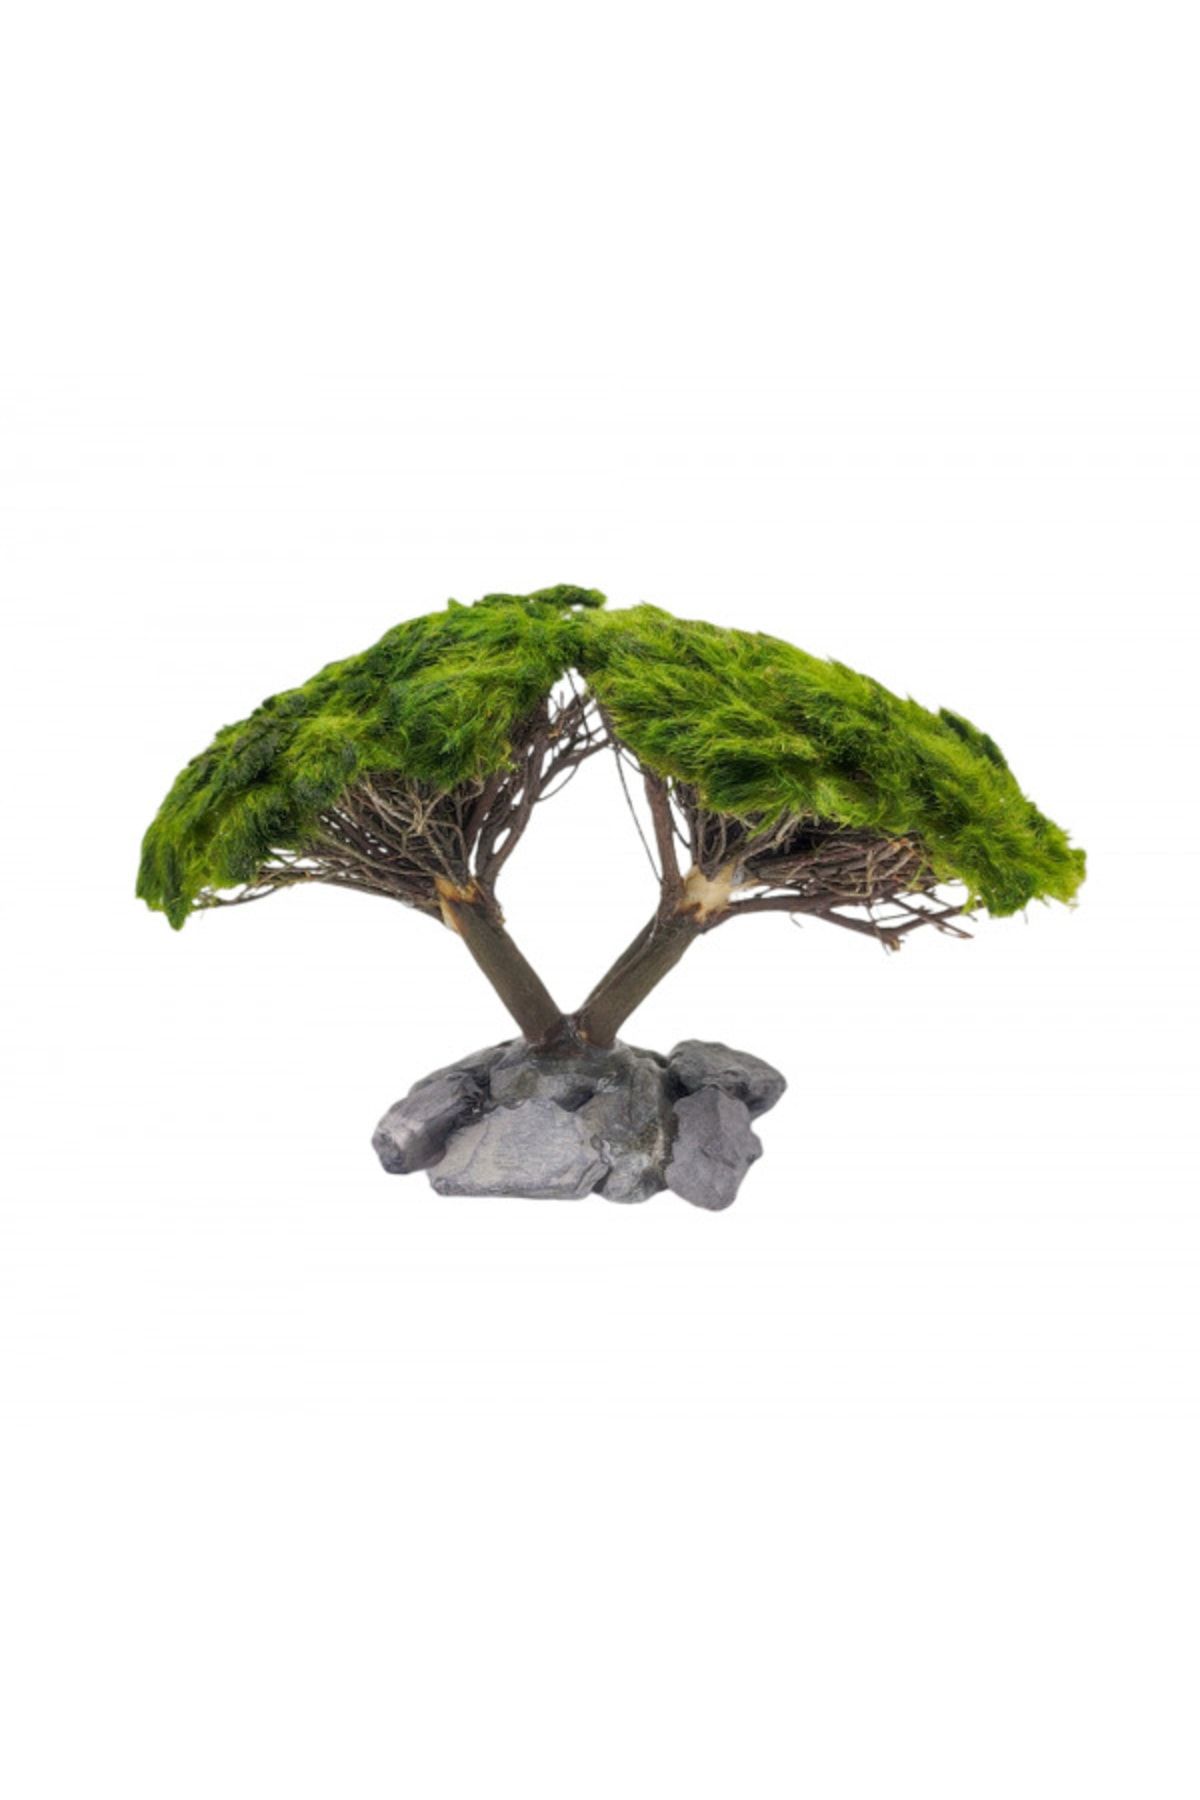 Marimo Scape Ikili Ağaç Figürü Moss Sarılı 's'